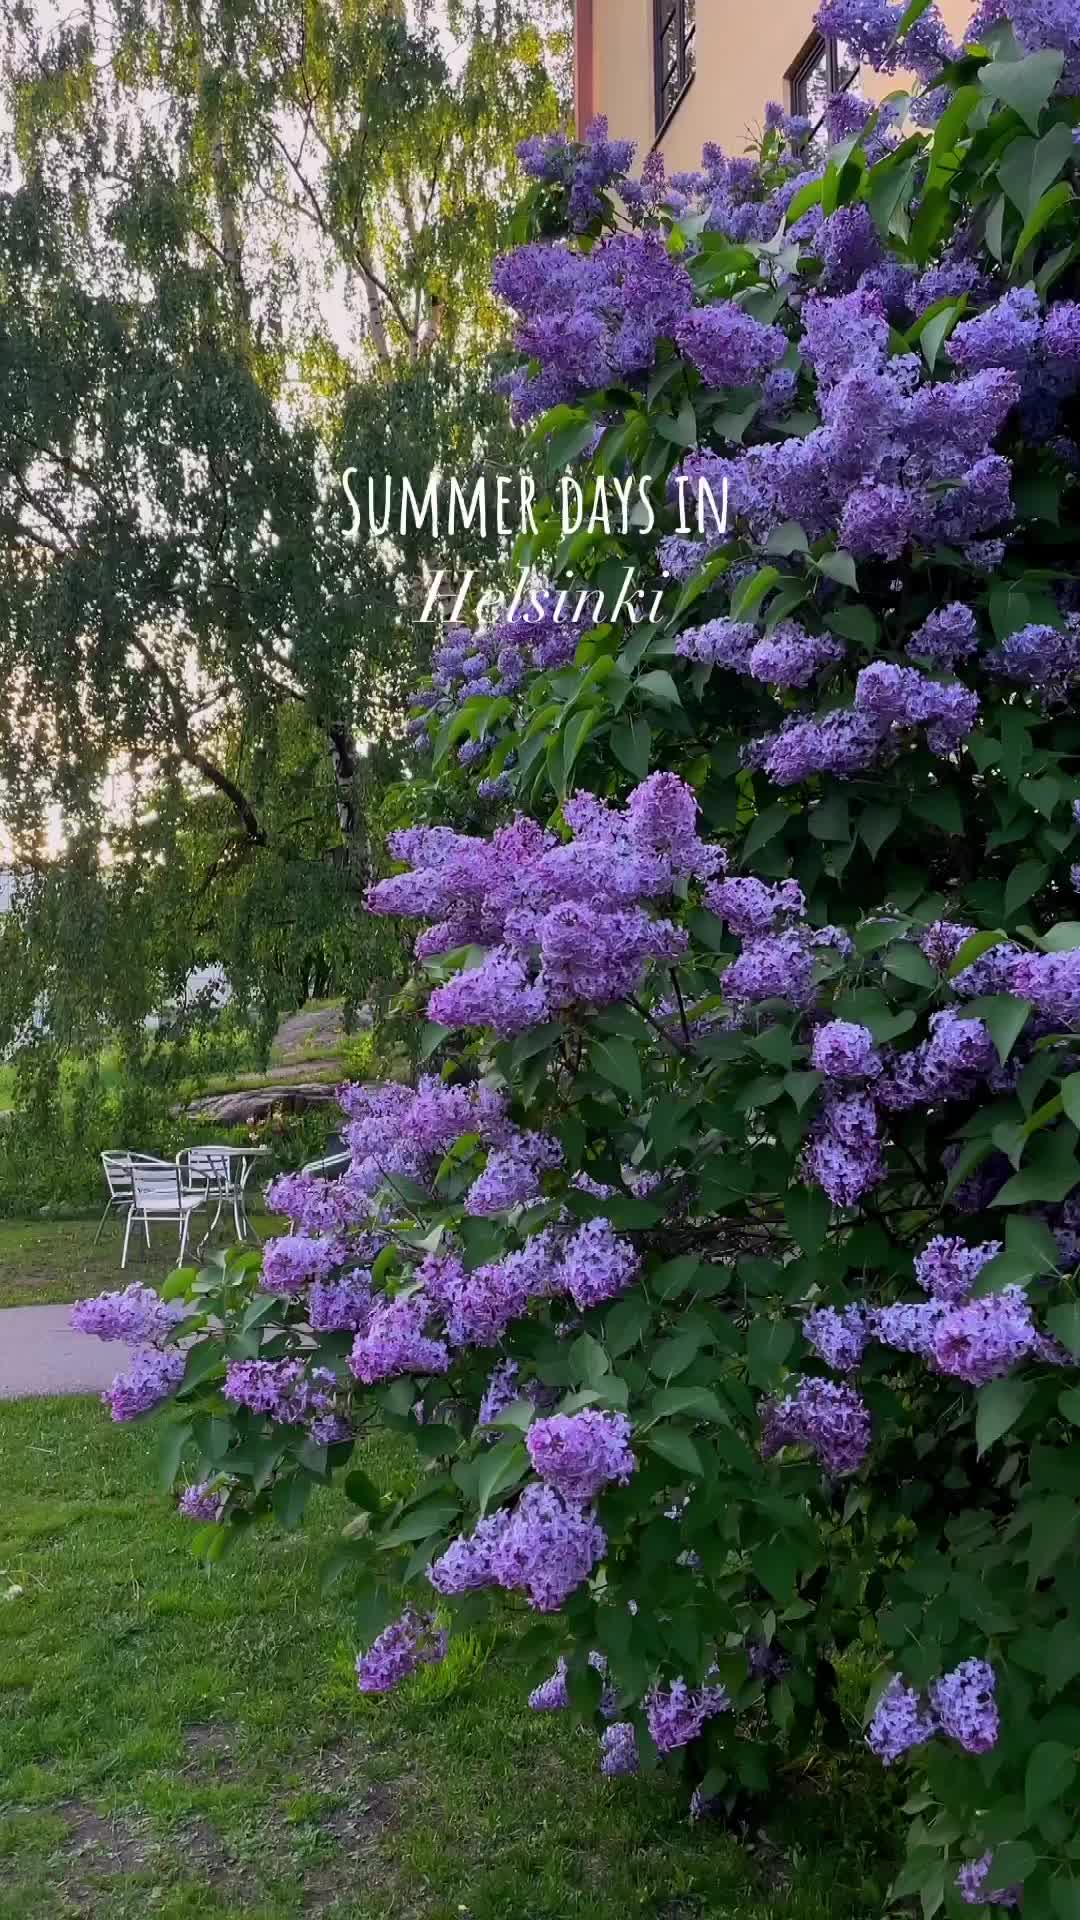 Enjoy the Last Sunny Days of Helsinki Summer 🌞